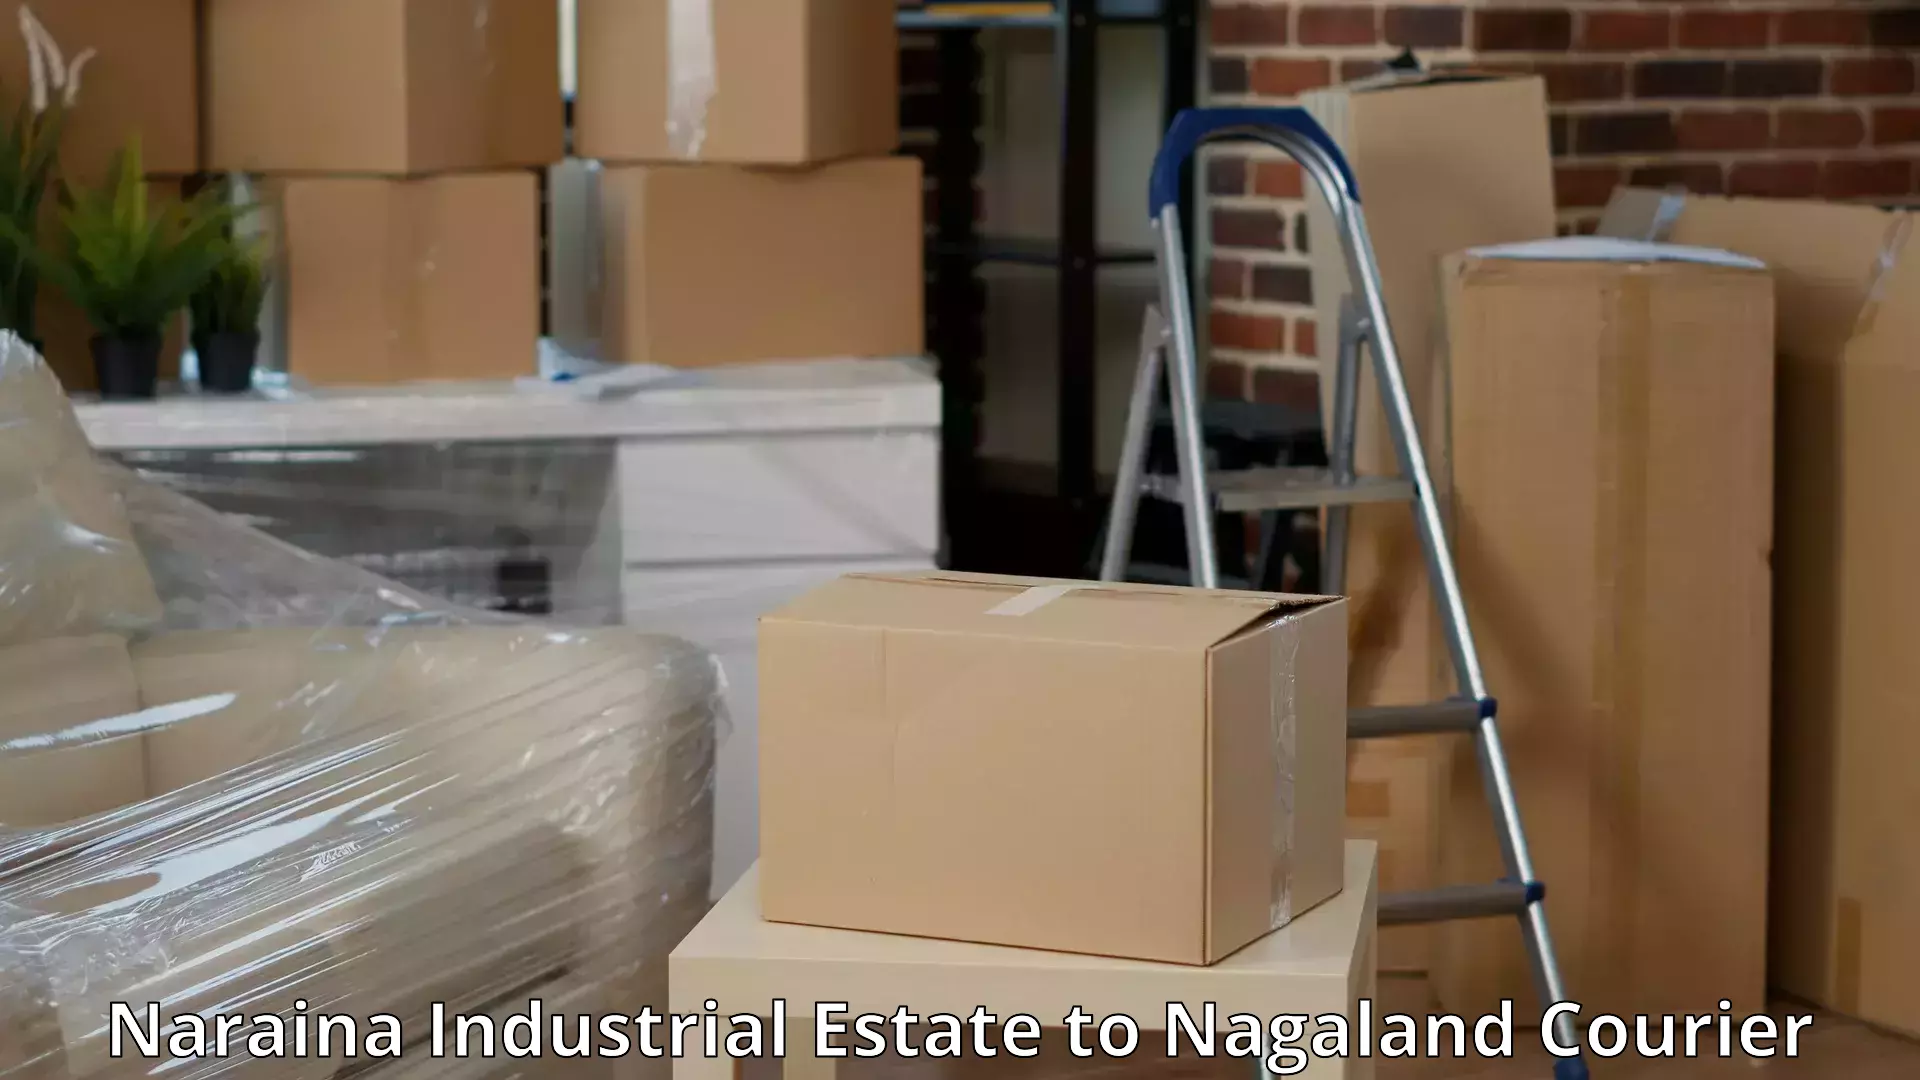 Professional moving company Naraina Industrial Estate to Nagaland